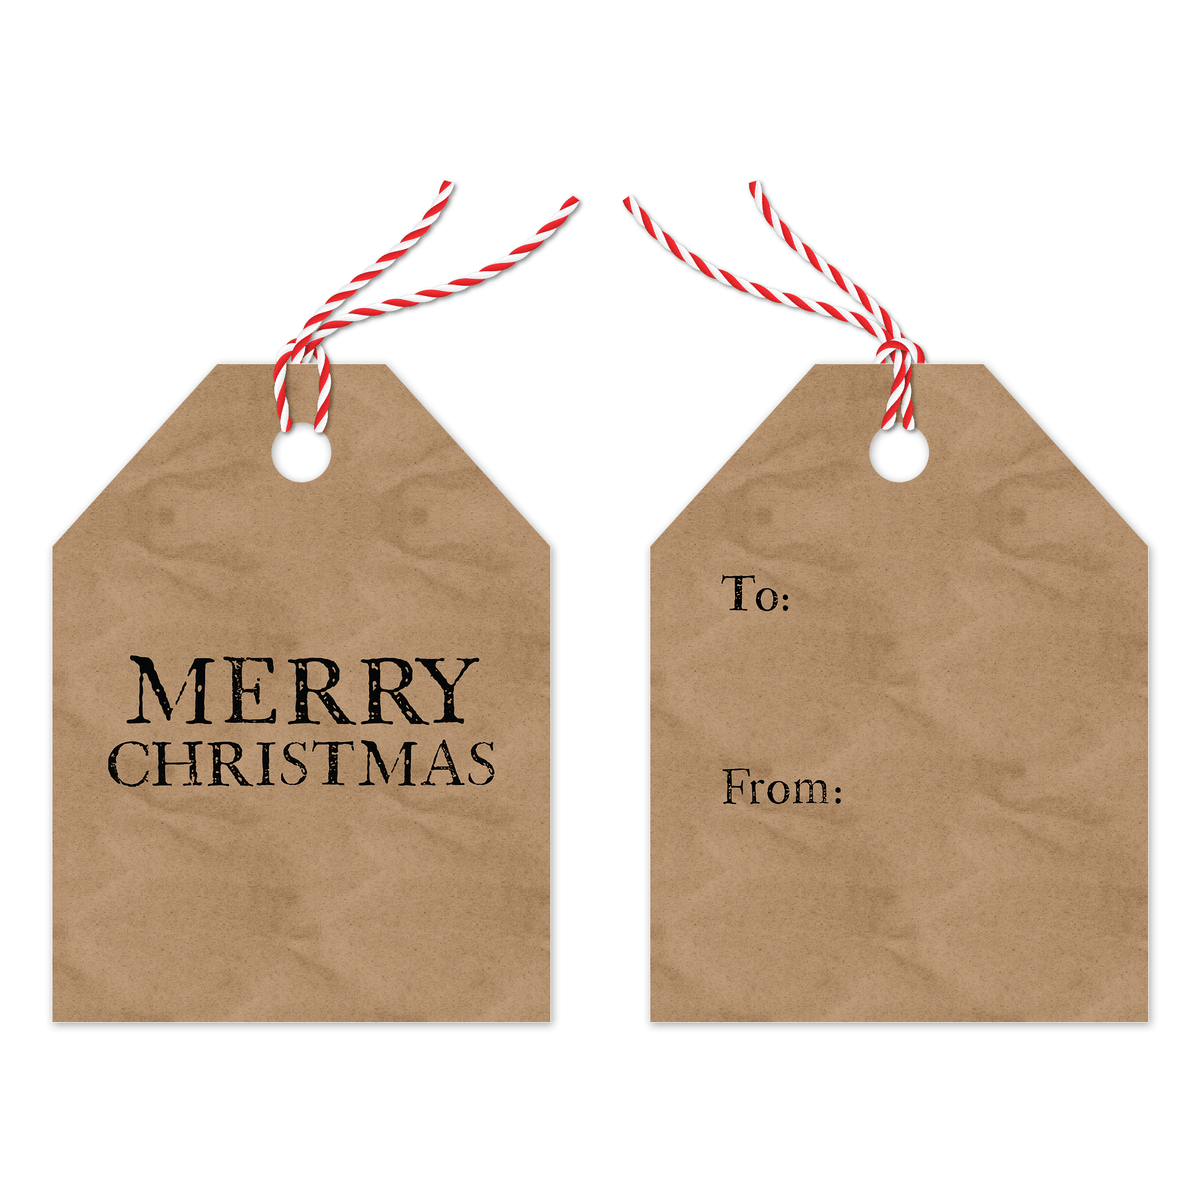 Merry Christmas Designer Gift Cards Pro Supply Global